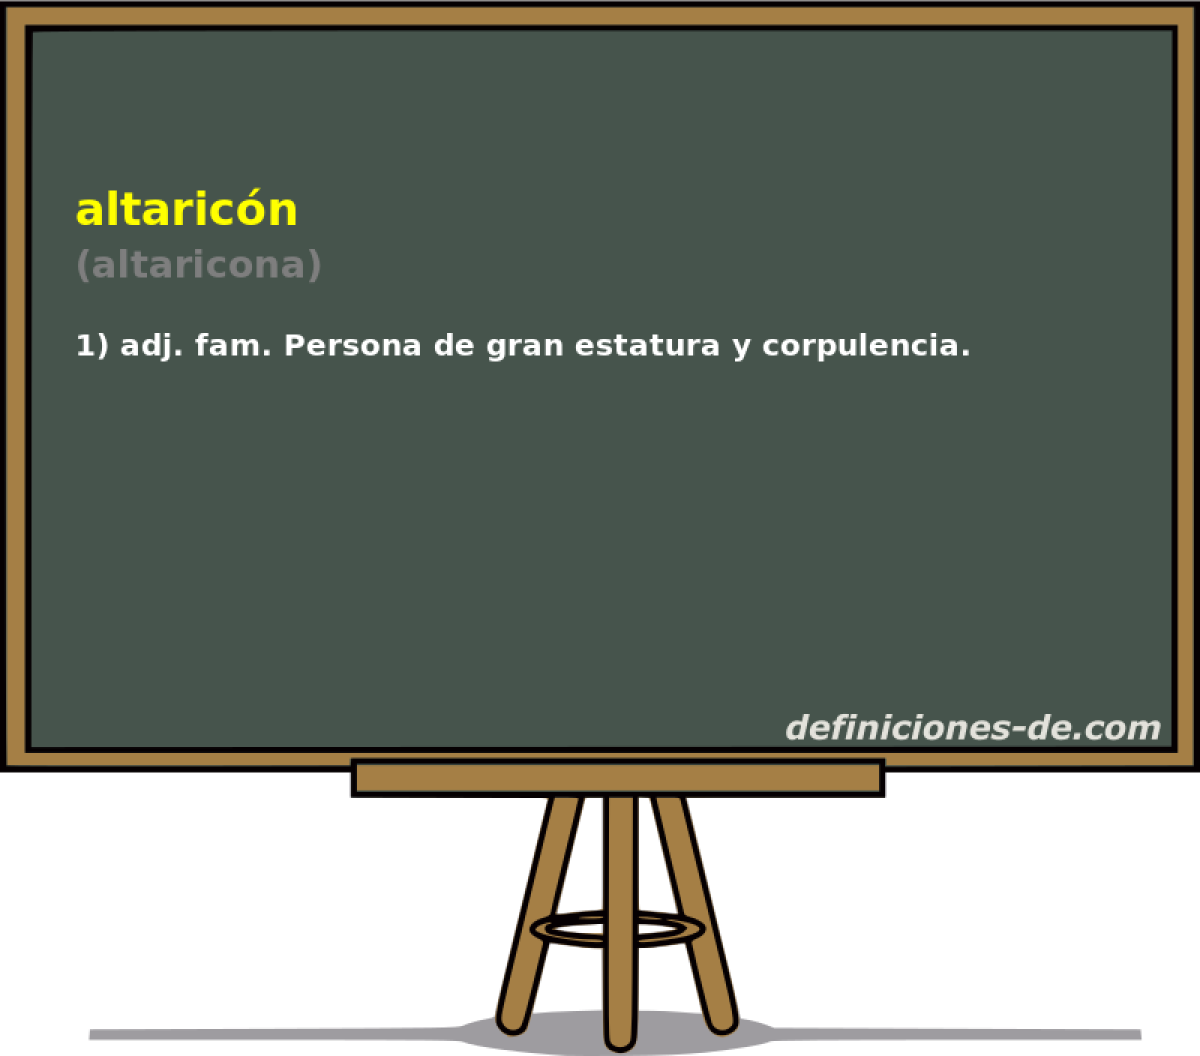 altaricn (altaricona)